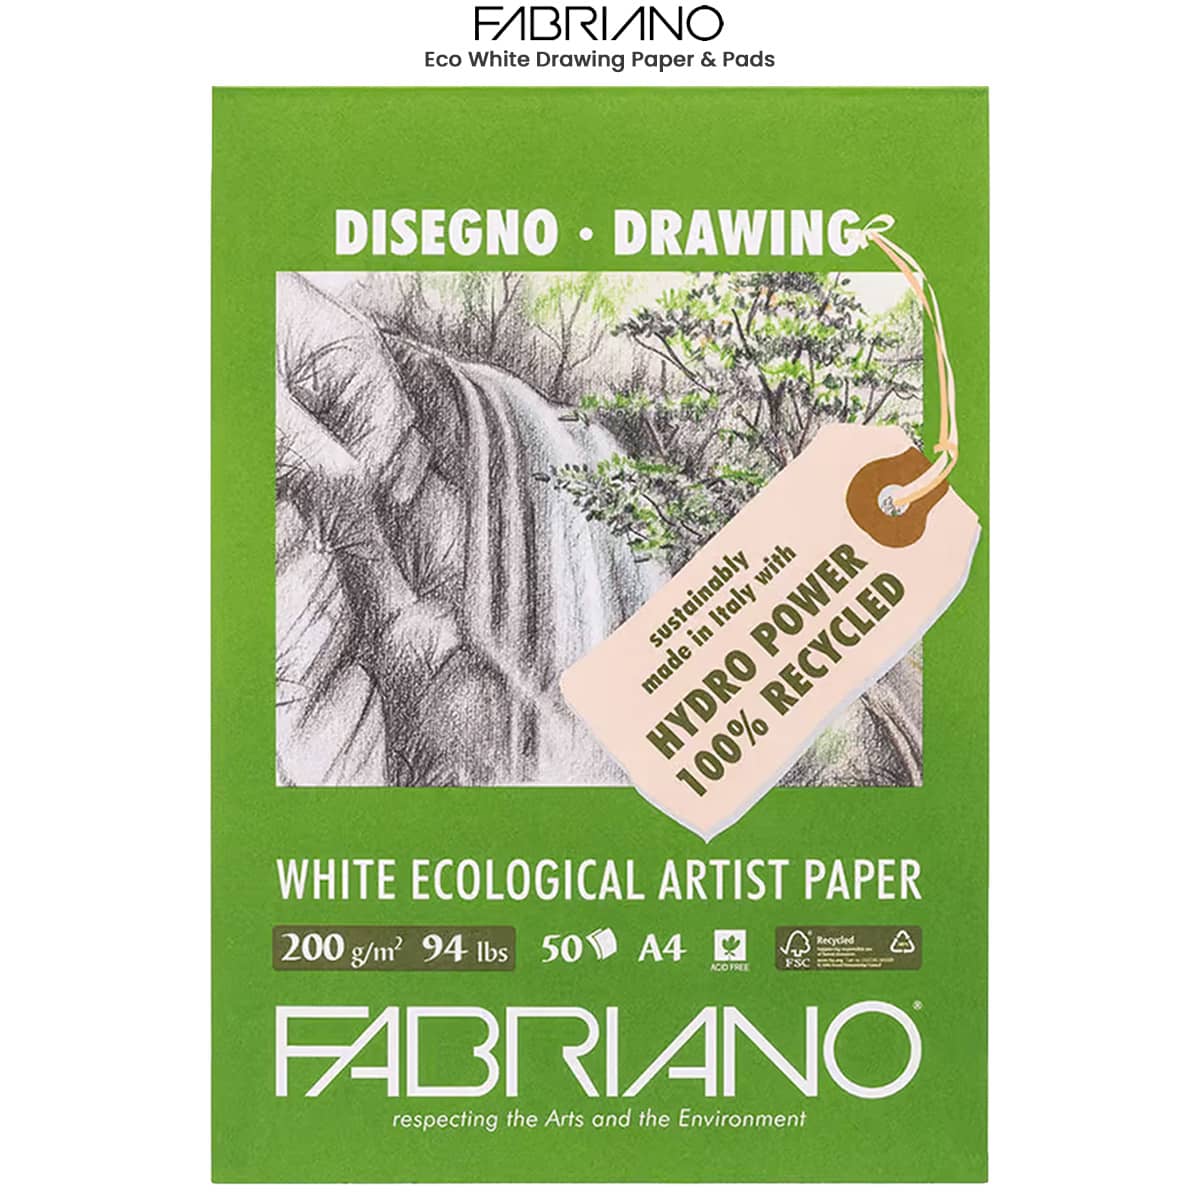  Fabriano 1264 Sketch Pad, 3.5 x 5, Light Cream : Arts, Crafts &  Sewing